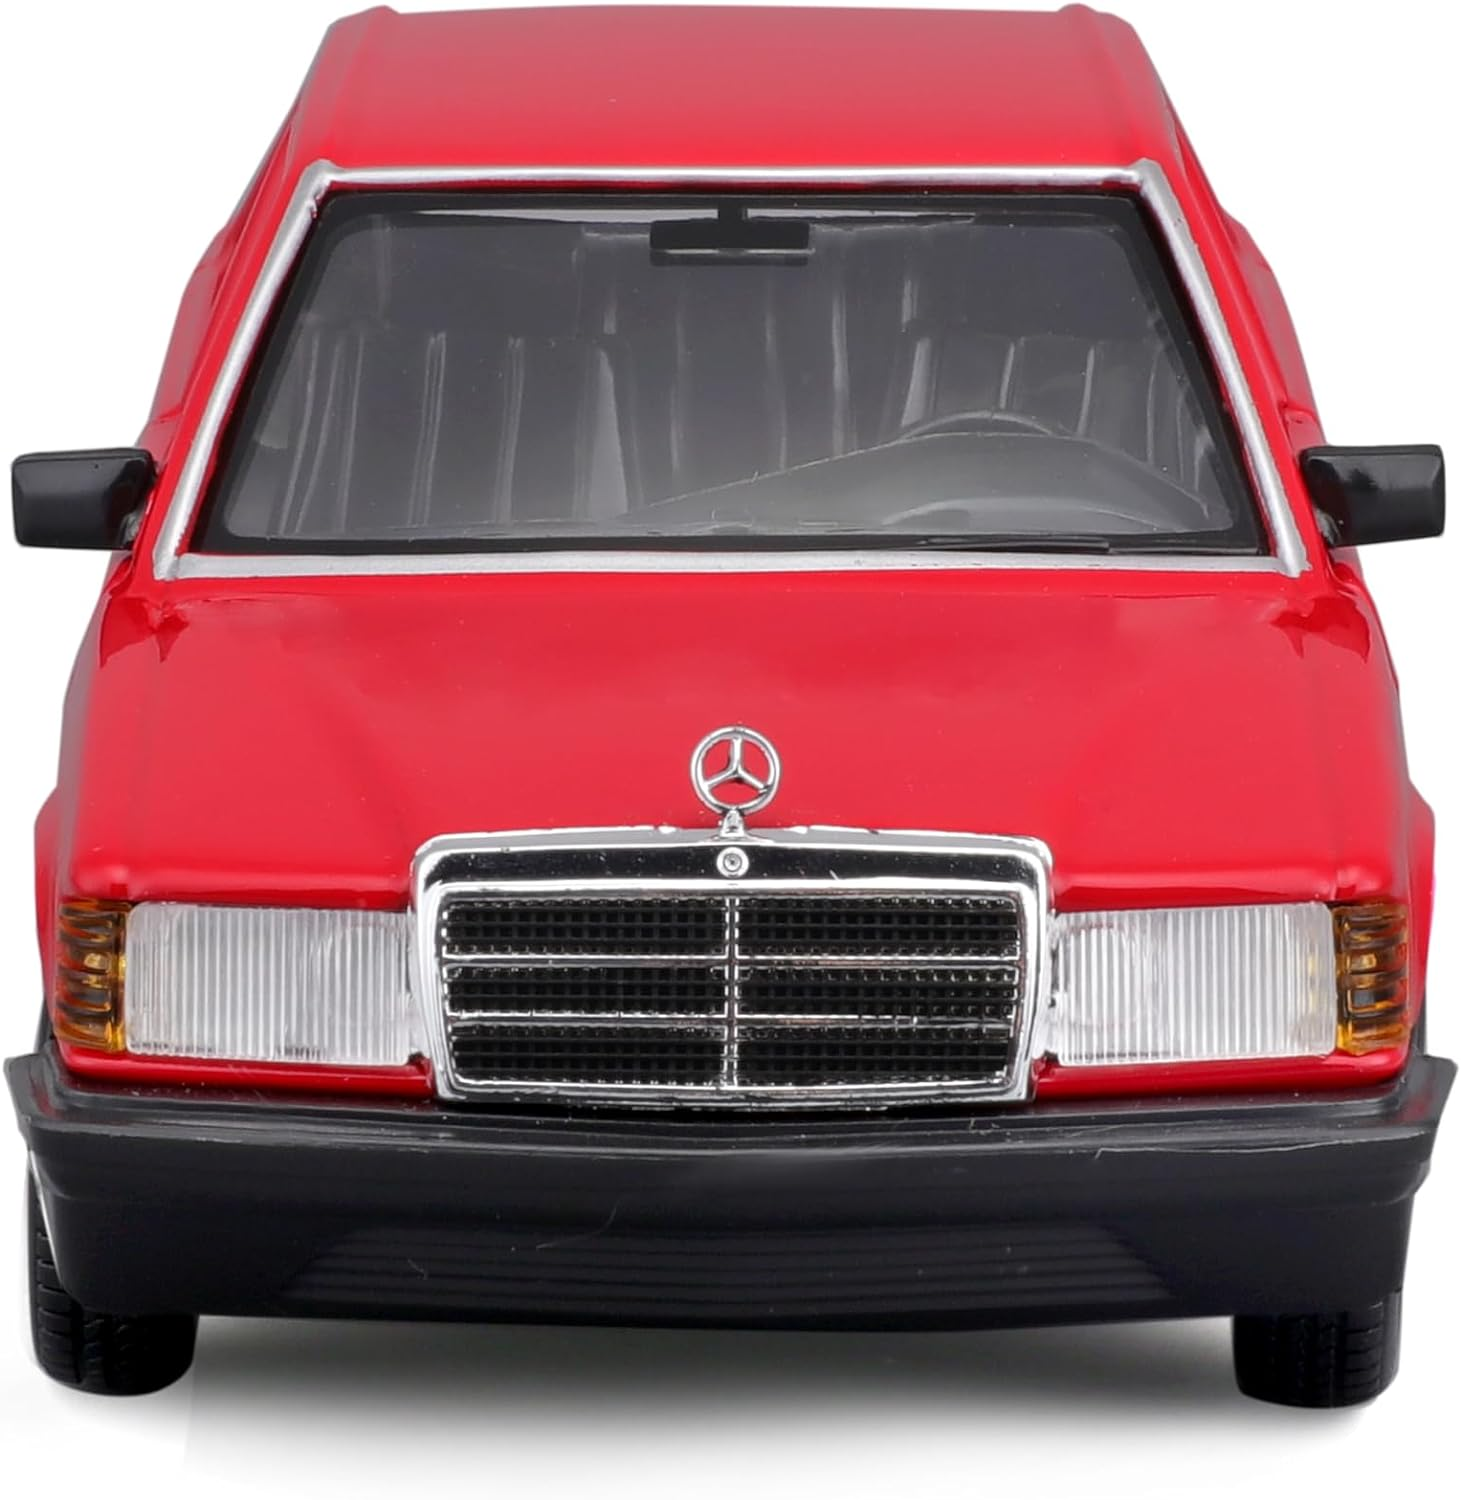 Spielzeugauto BBURAGO 190E Mercedes ´87 1:24) (rot, Maßstab